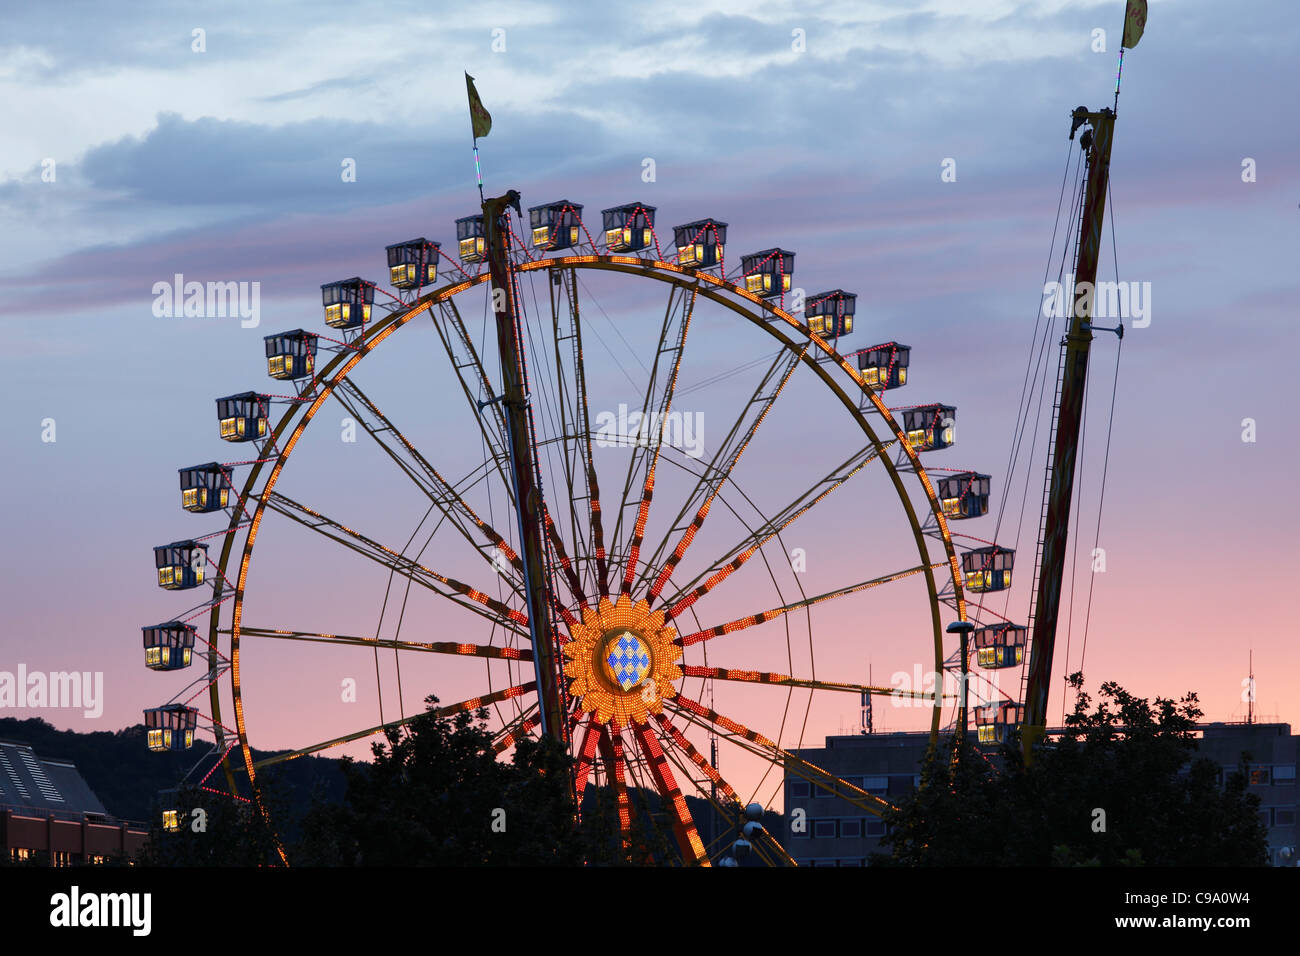 Germany, Bavaria, Wuerzburg, View of Big wheel in kiliani fair Stock Photo